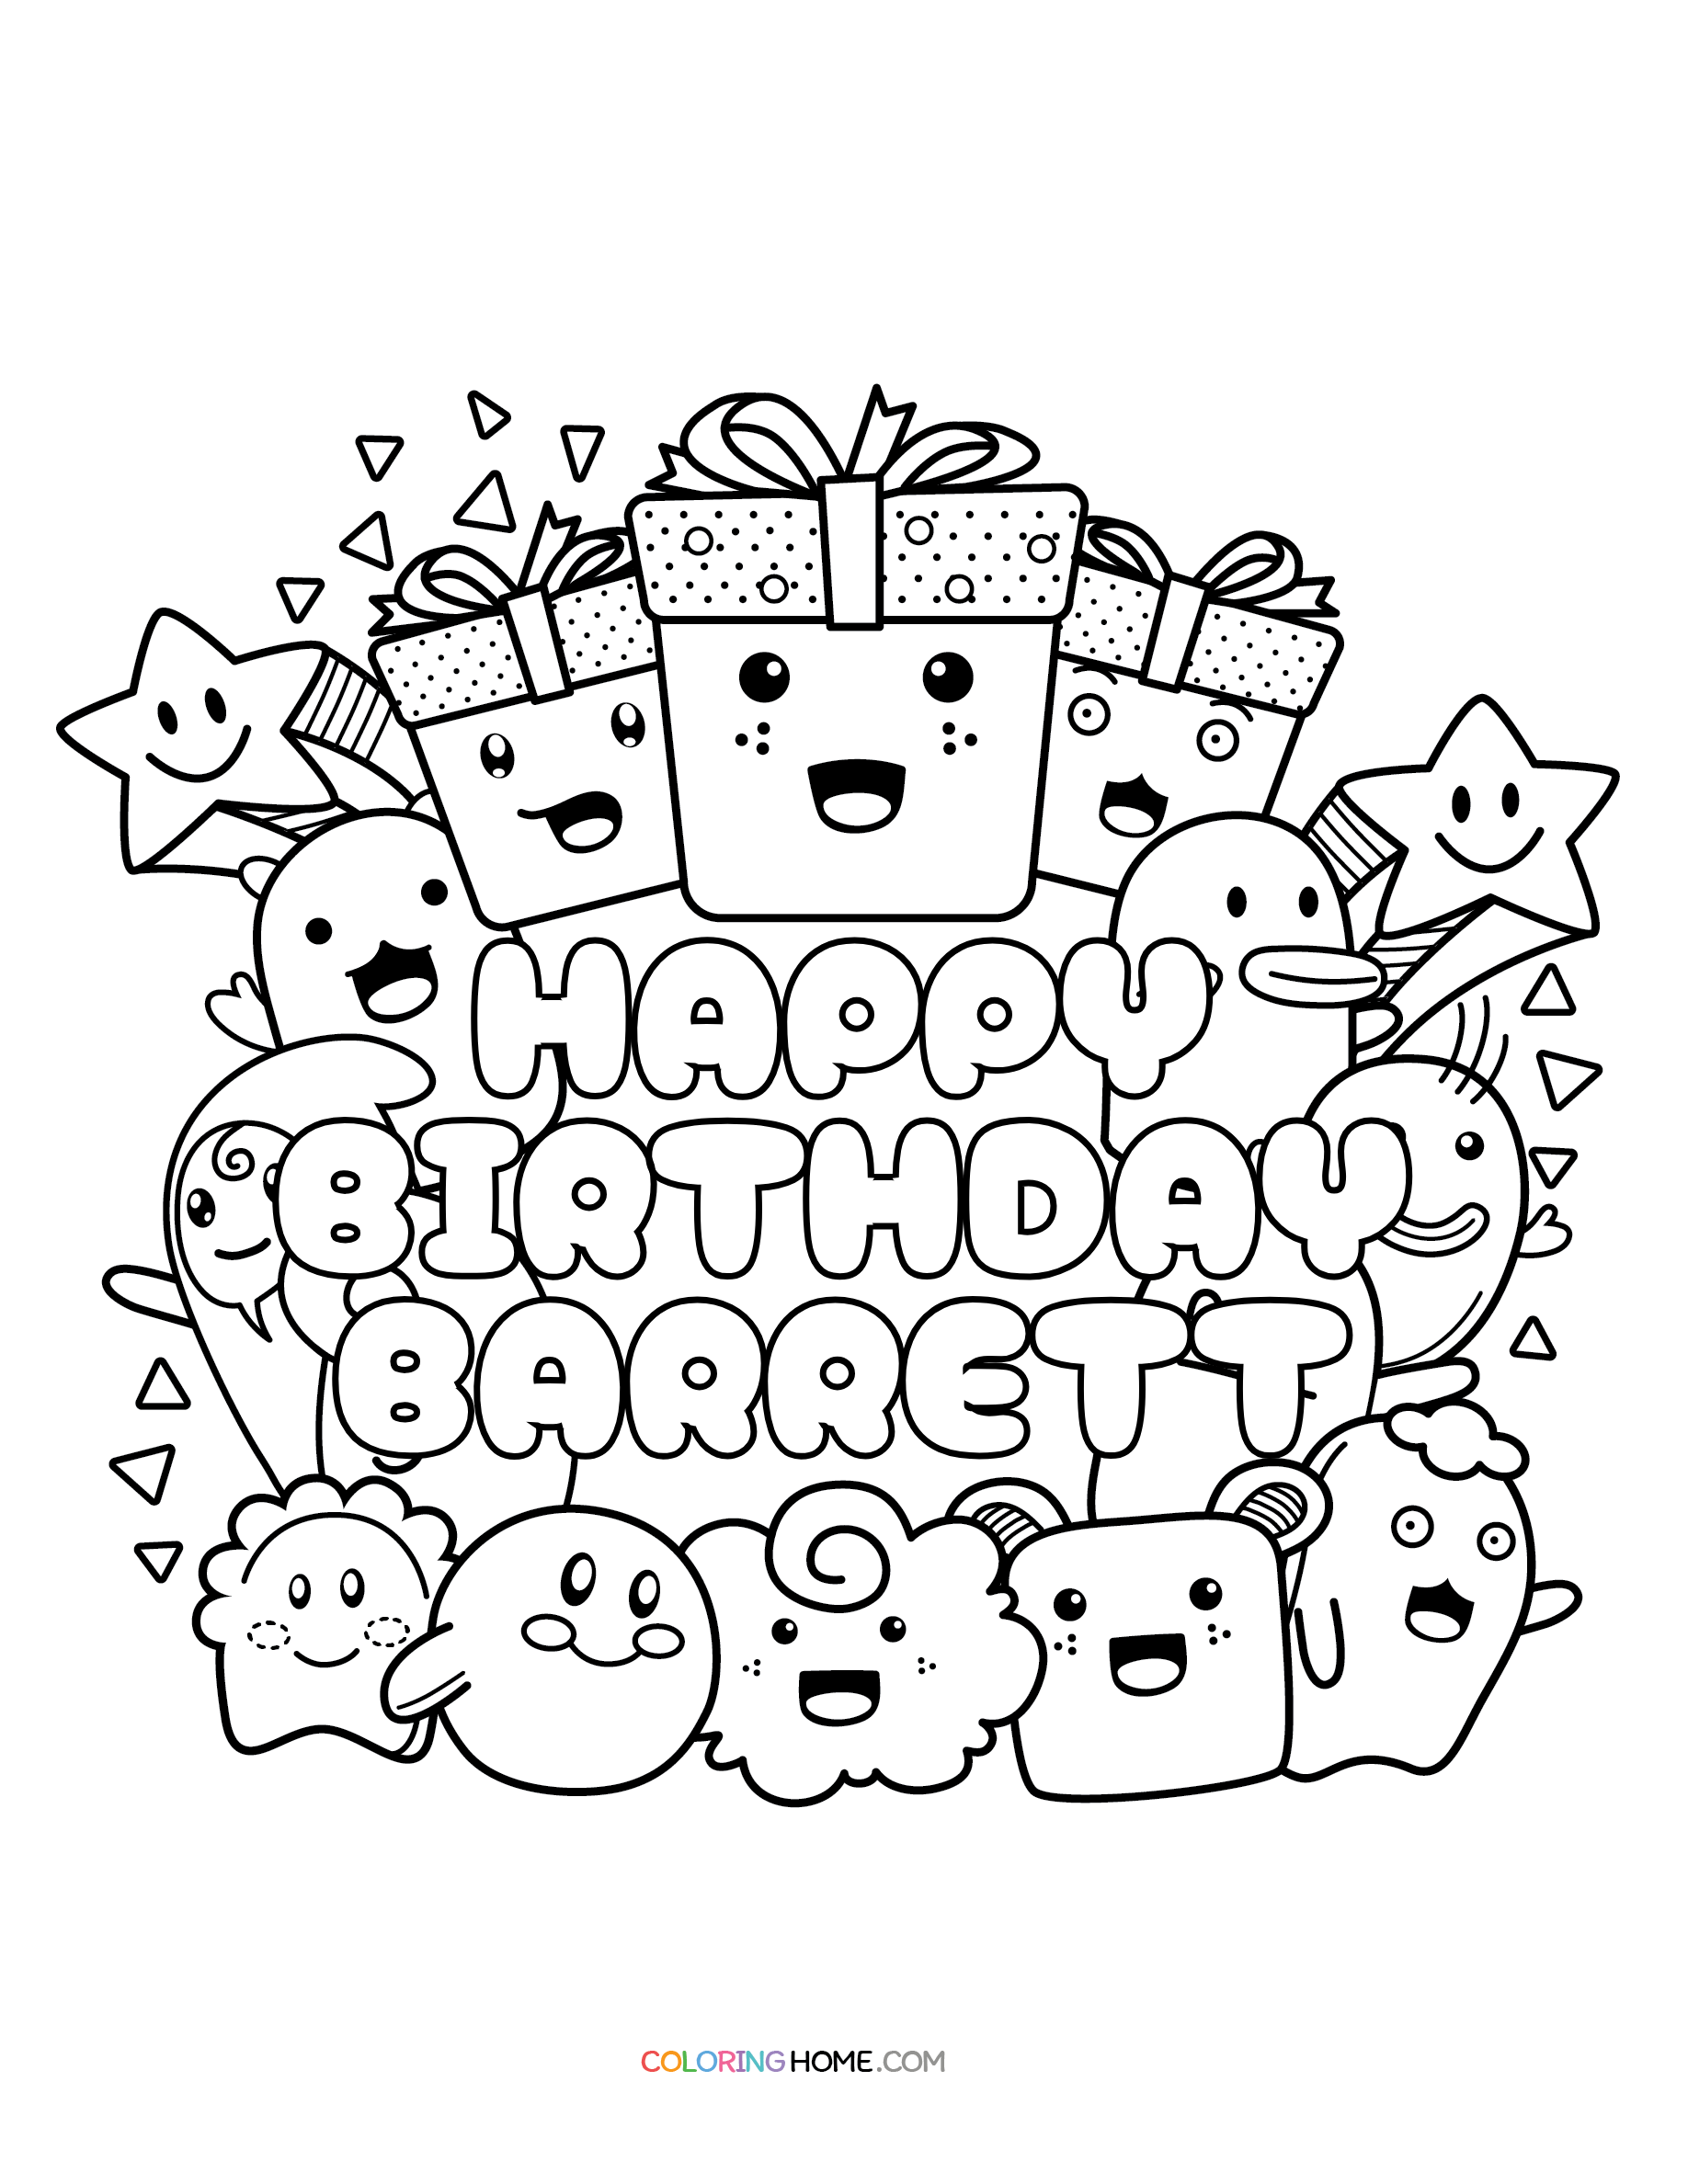 Happy Birthday Barrett coloring page